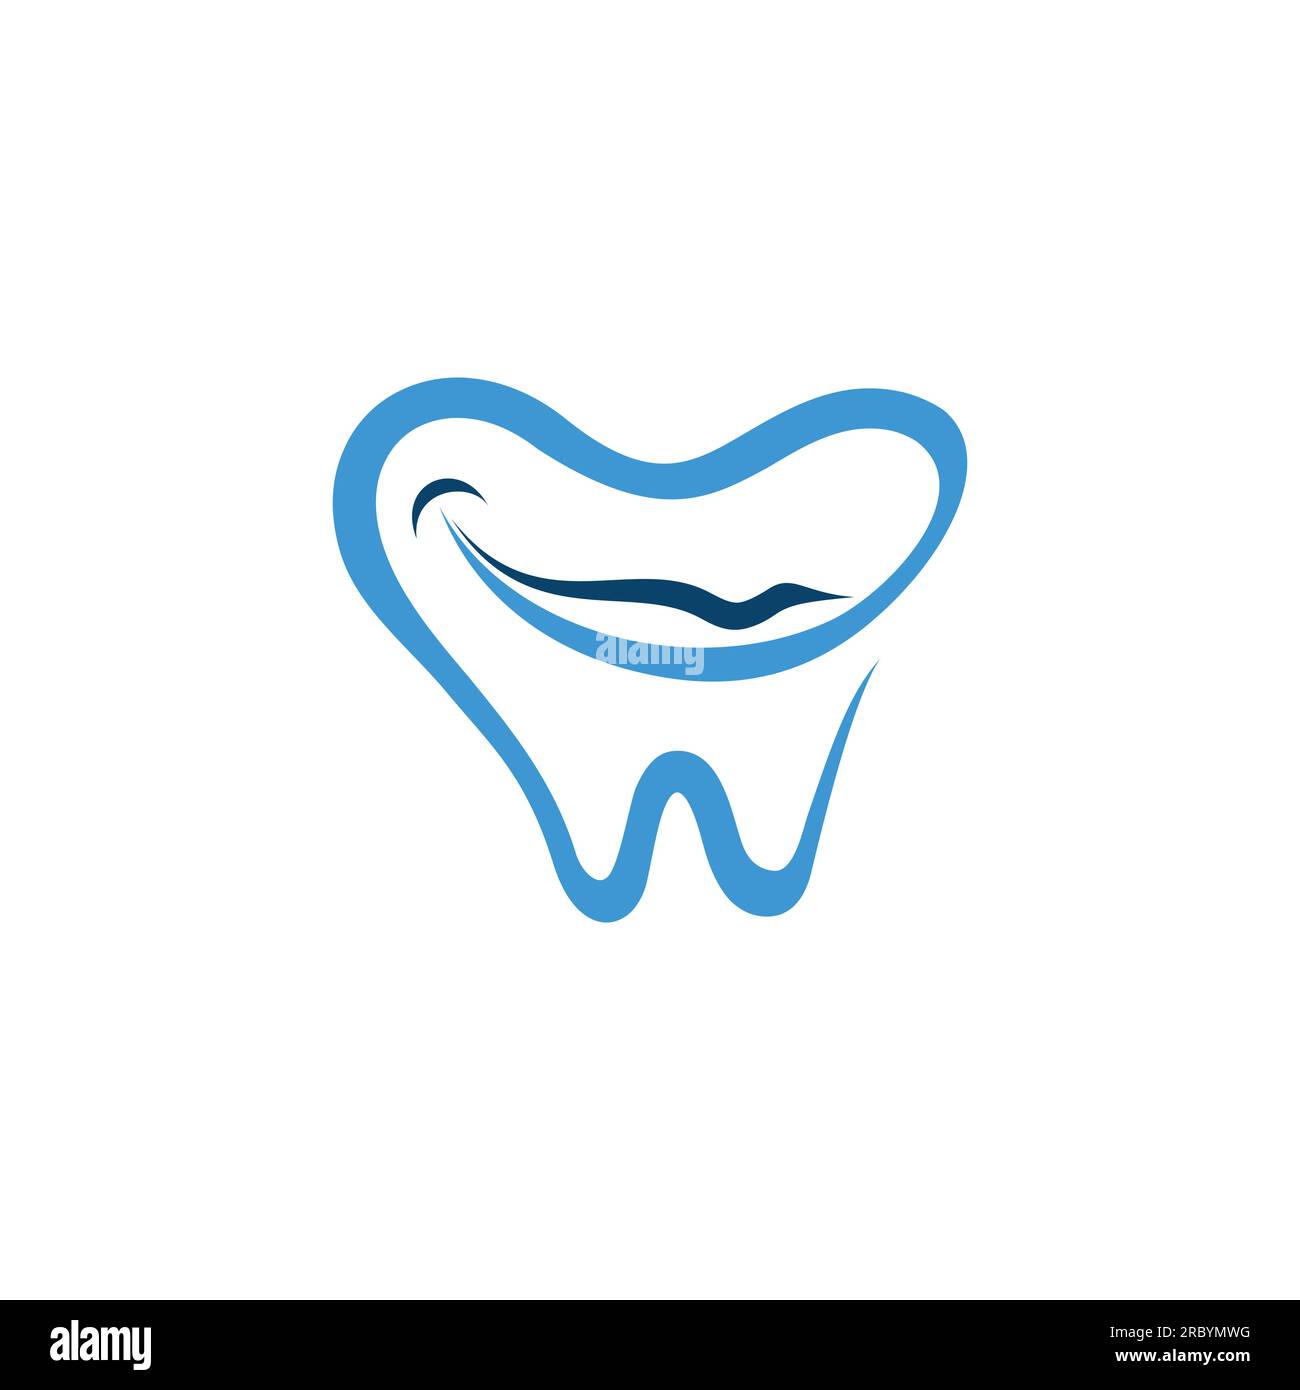 Dental logo vector image. Dental care logo design vector illustration. Dental logo. Orthodontic logo Pro Vector Stock Vector